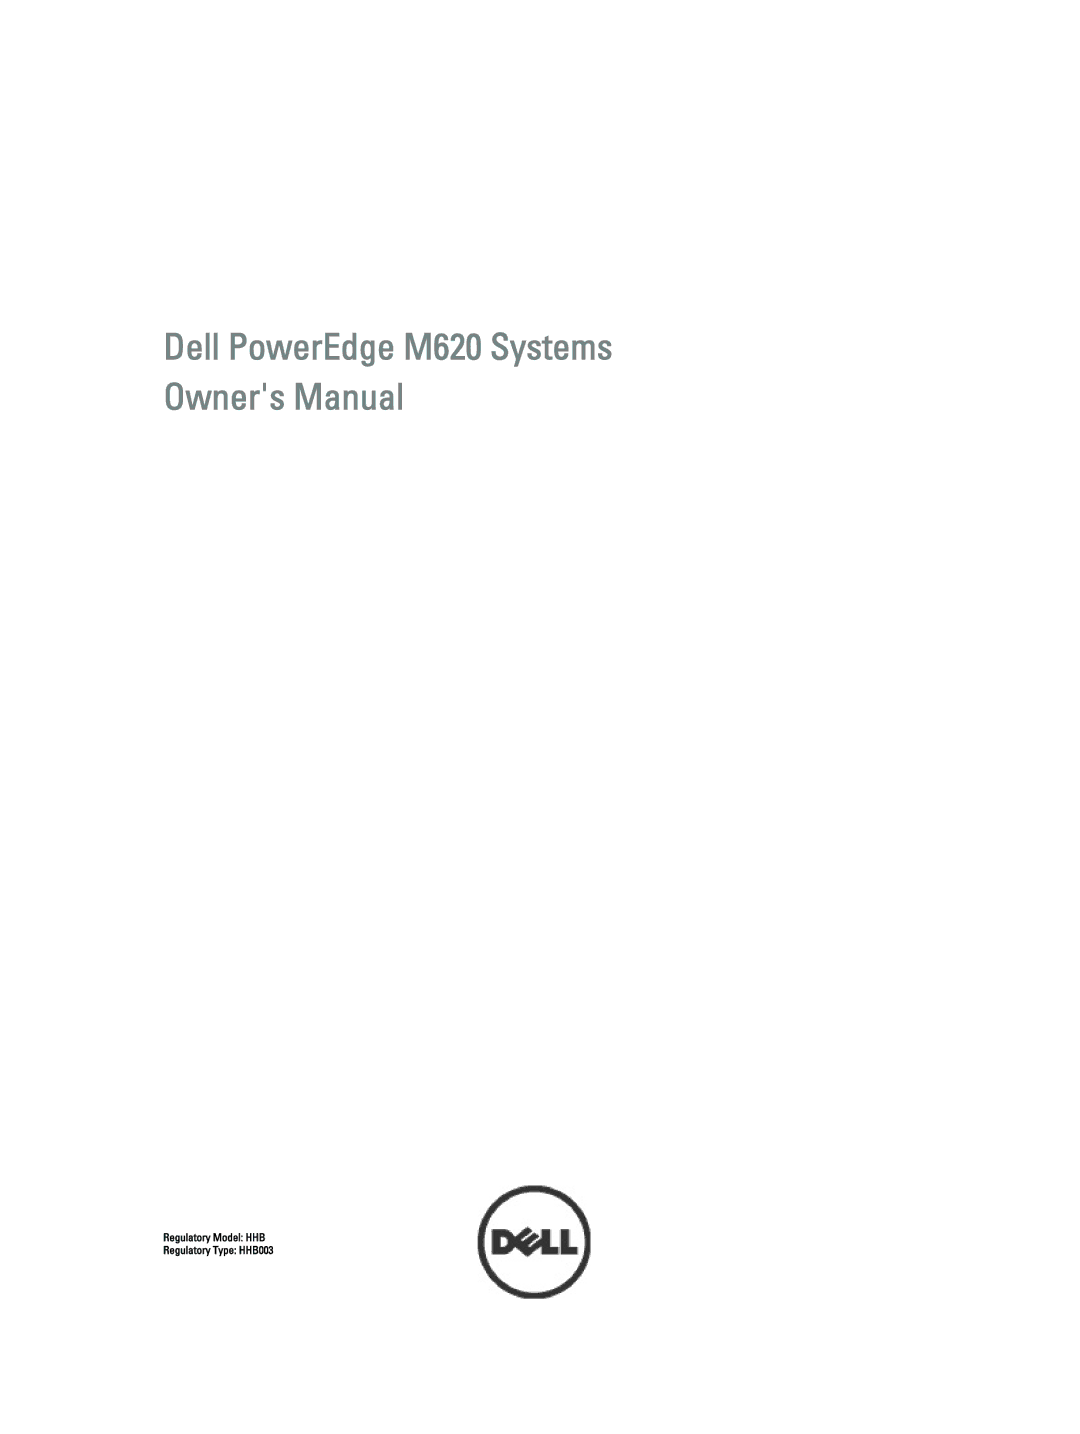 Dell M620 owner manual Regulatory Model HHB Regulatory Type HHB003 